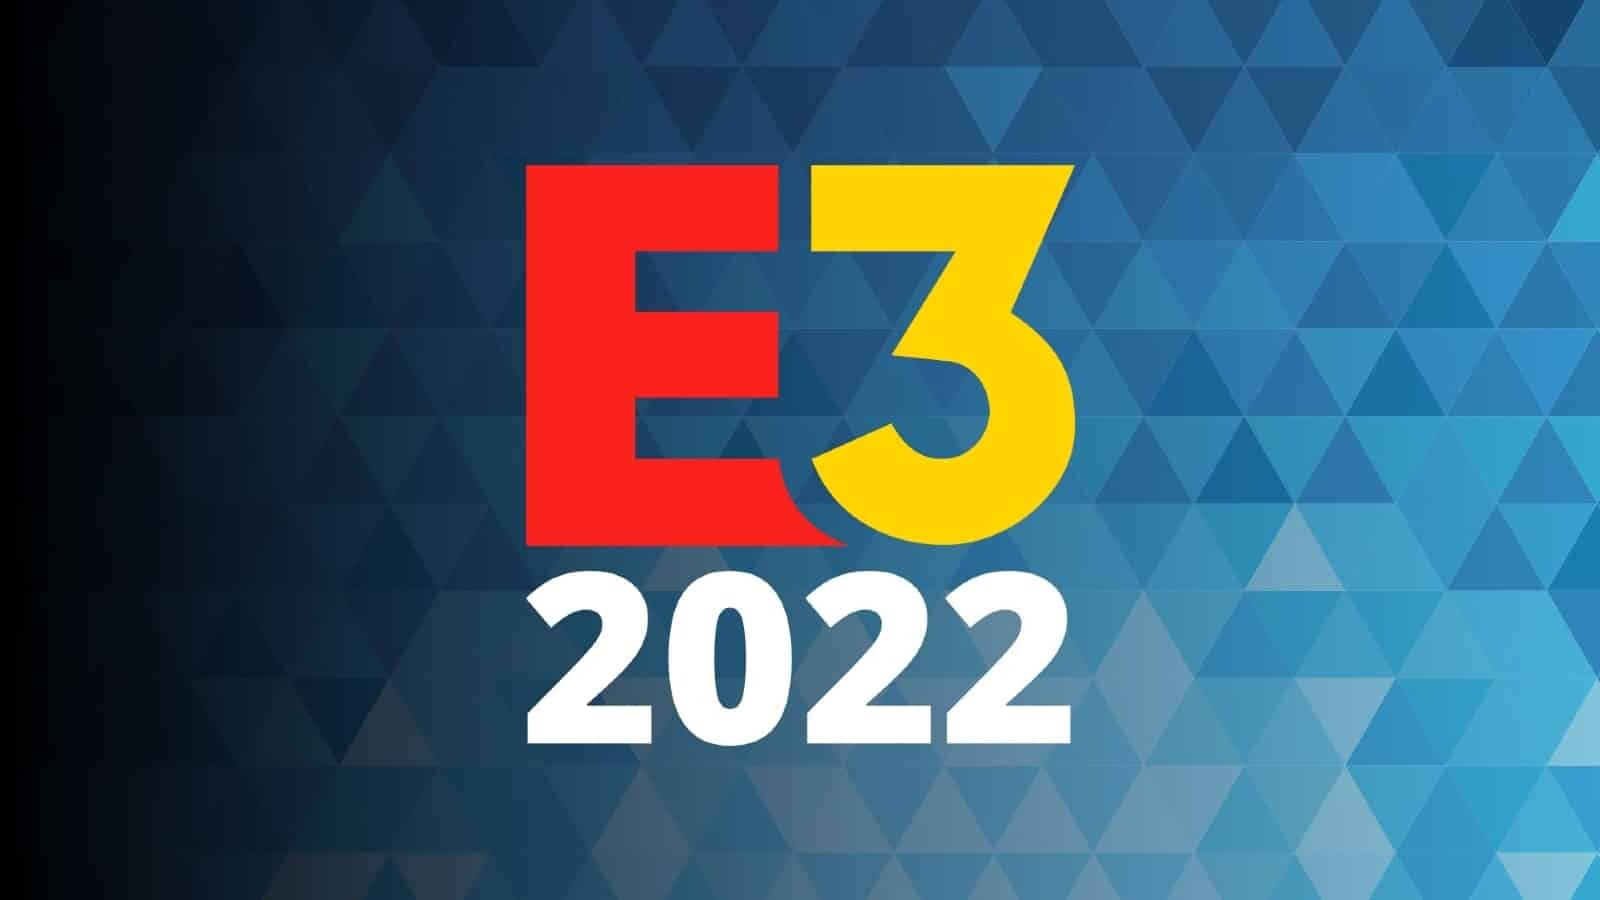 e3-2022